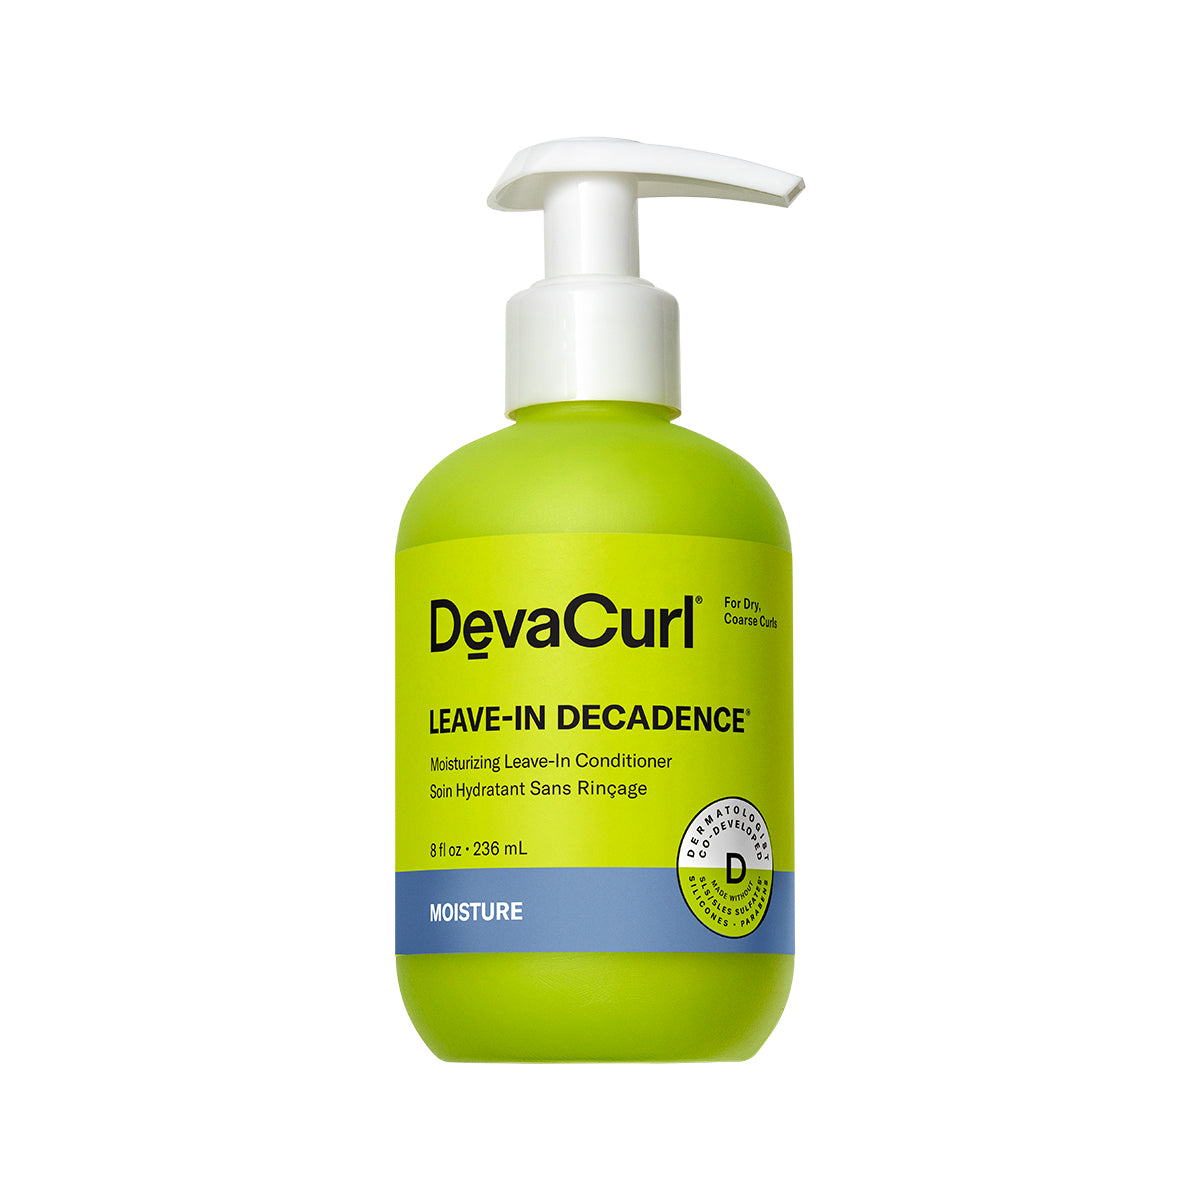 DevaCurl Leave-In Decadence-Deva Curl Products-ellënoire body, bath fragrance & curly hair